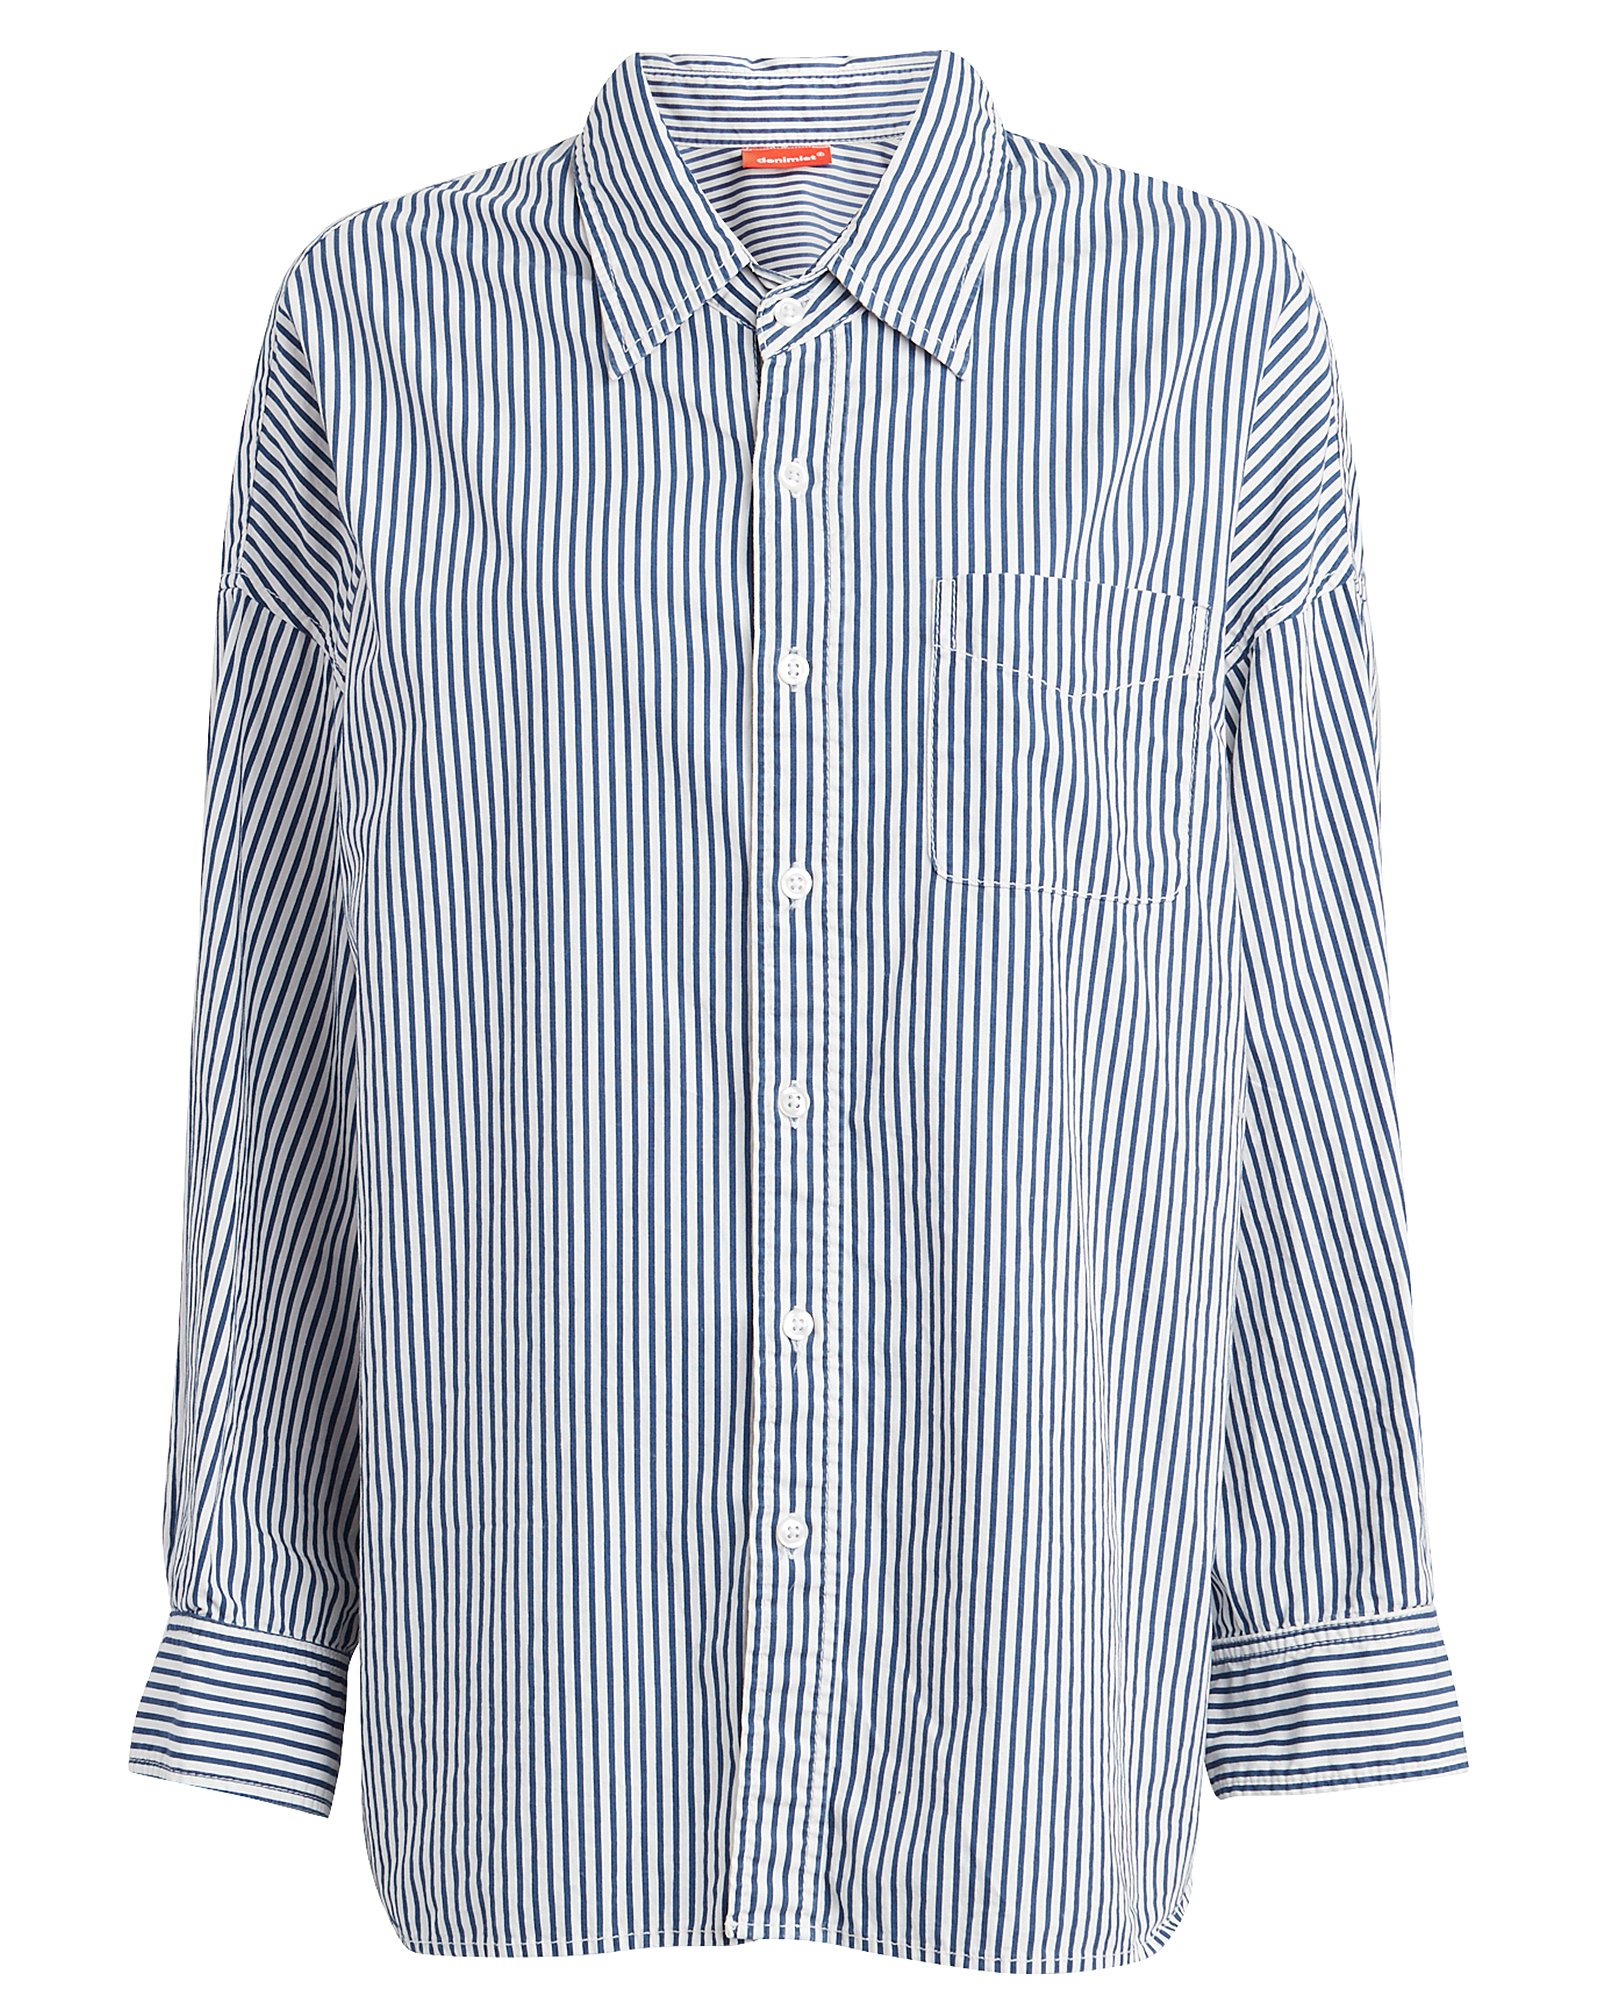 DENIMIST Striped Cotton Button Down Shirt,060050155754